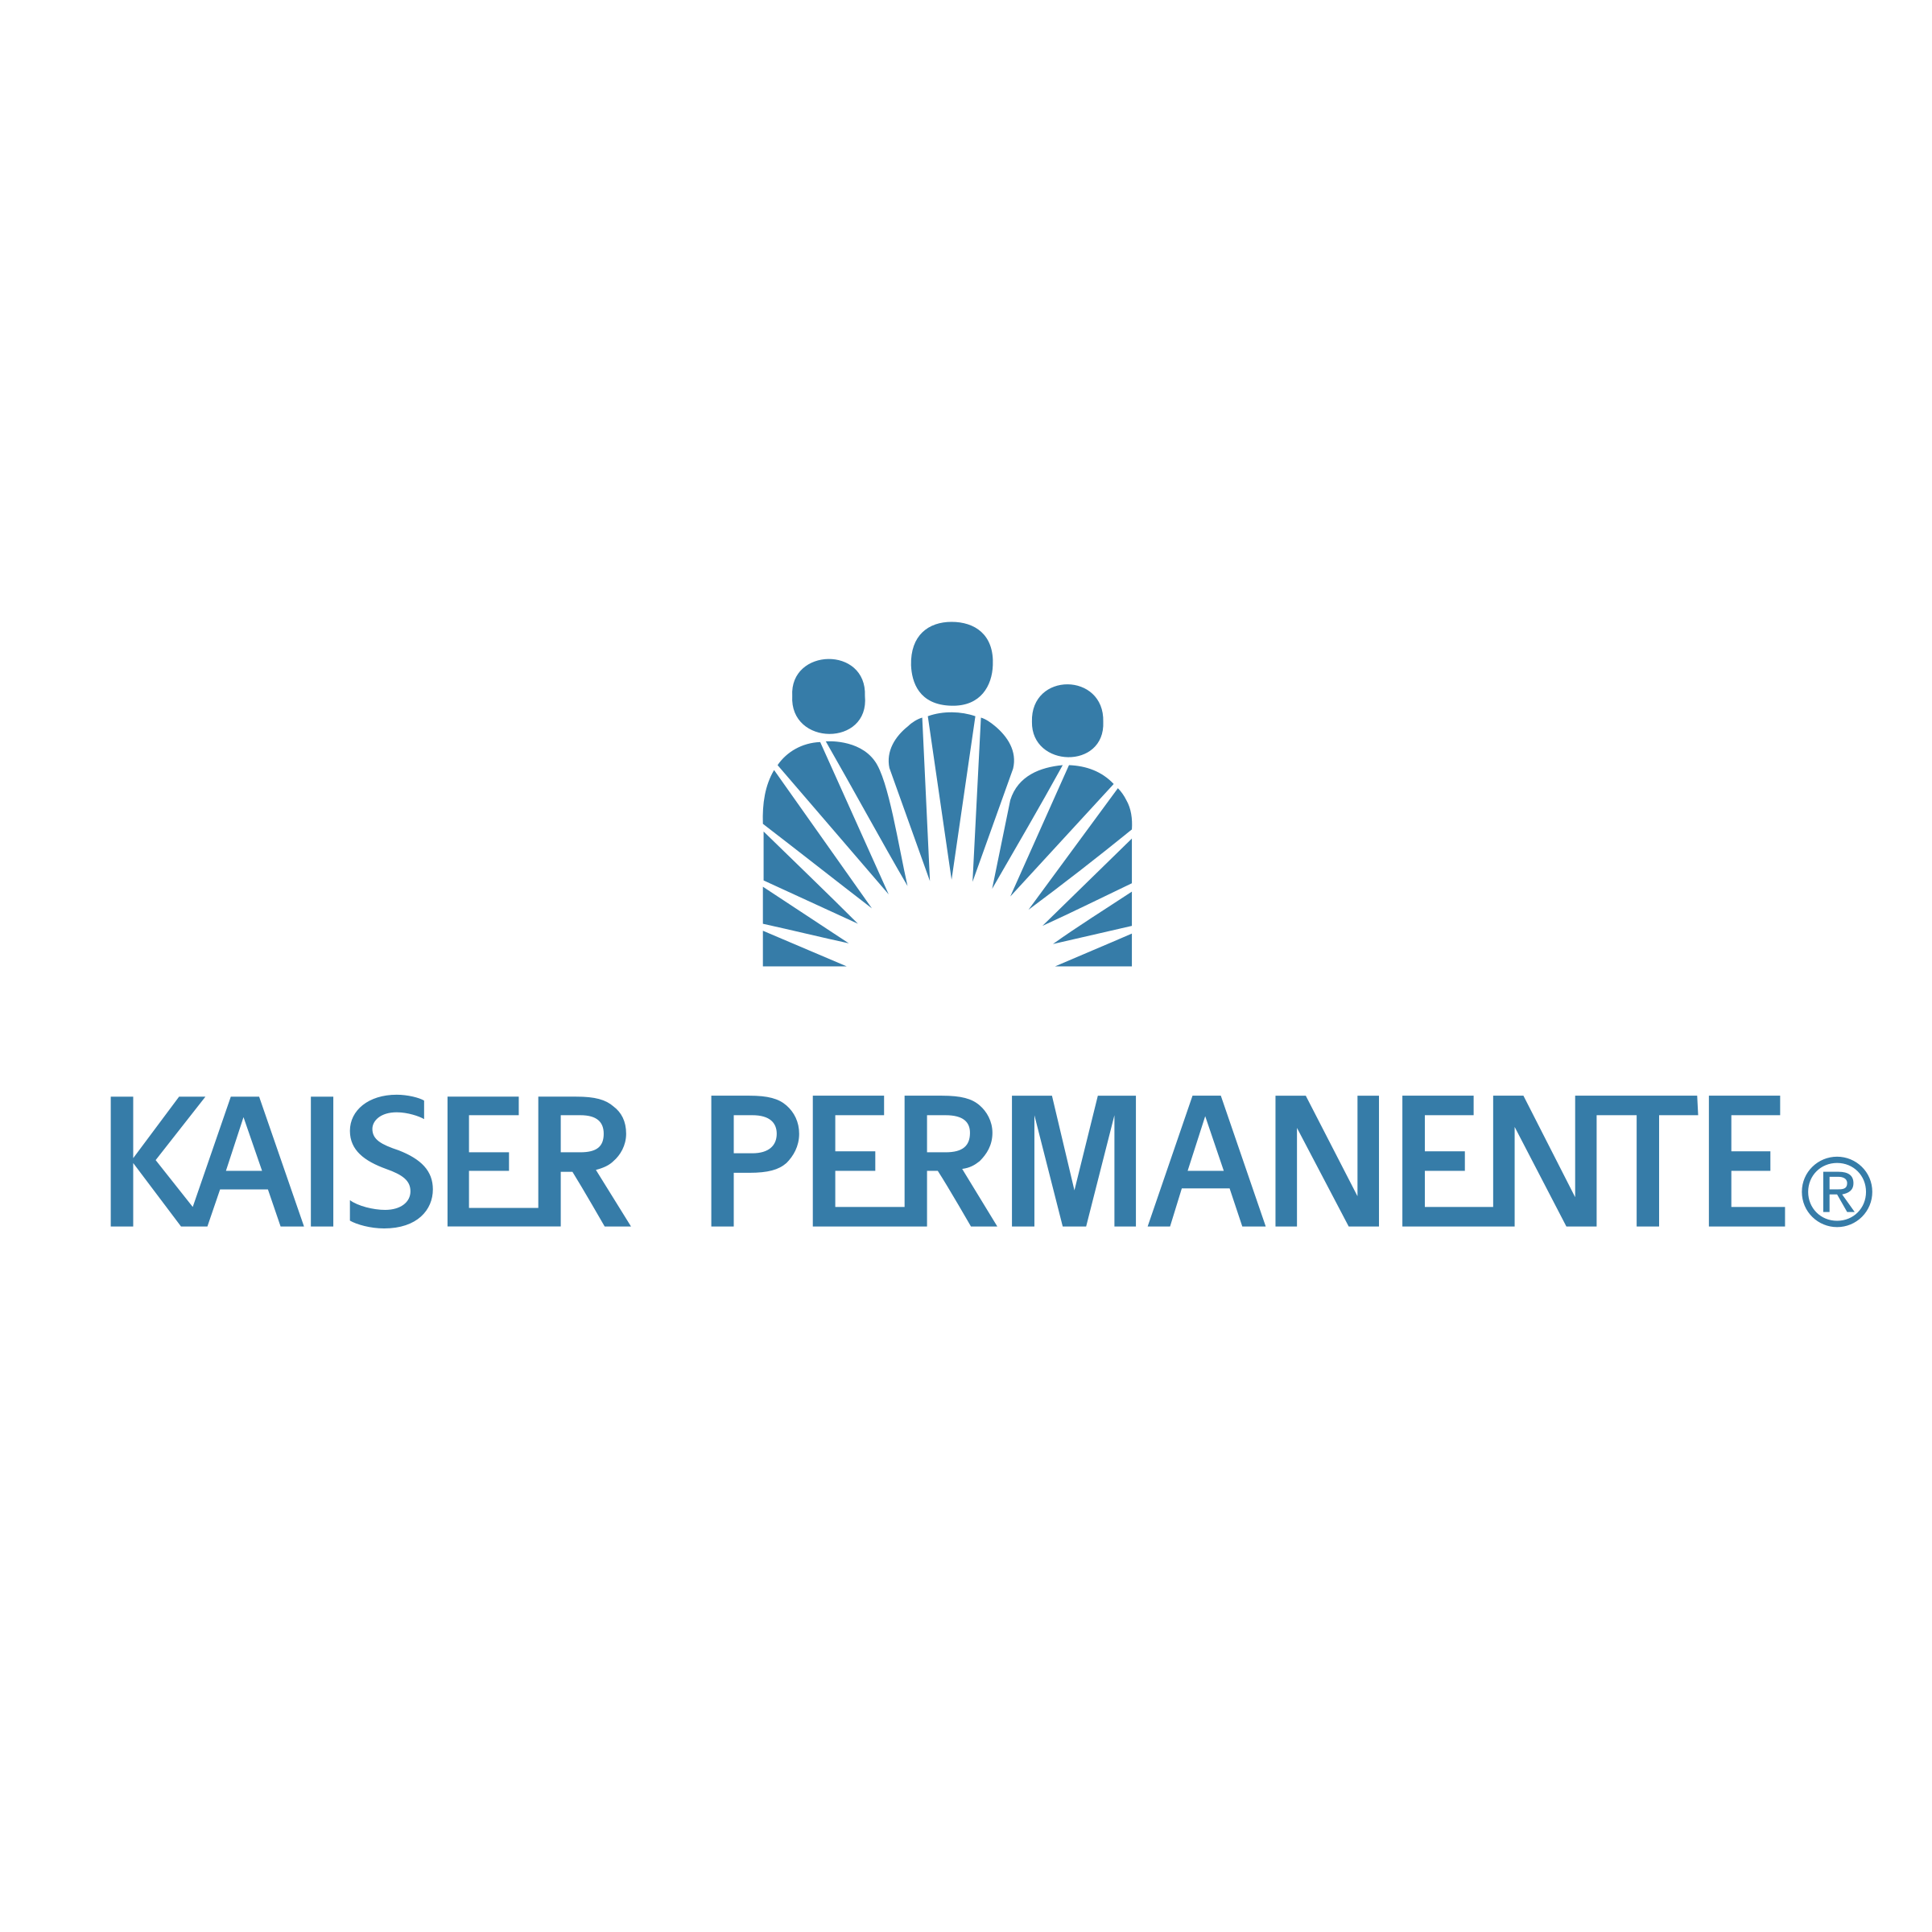 kaiser-permanente-2-logo-png-transparent.png